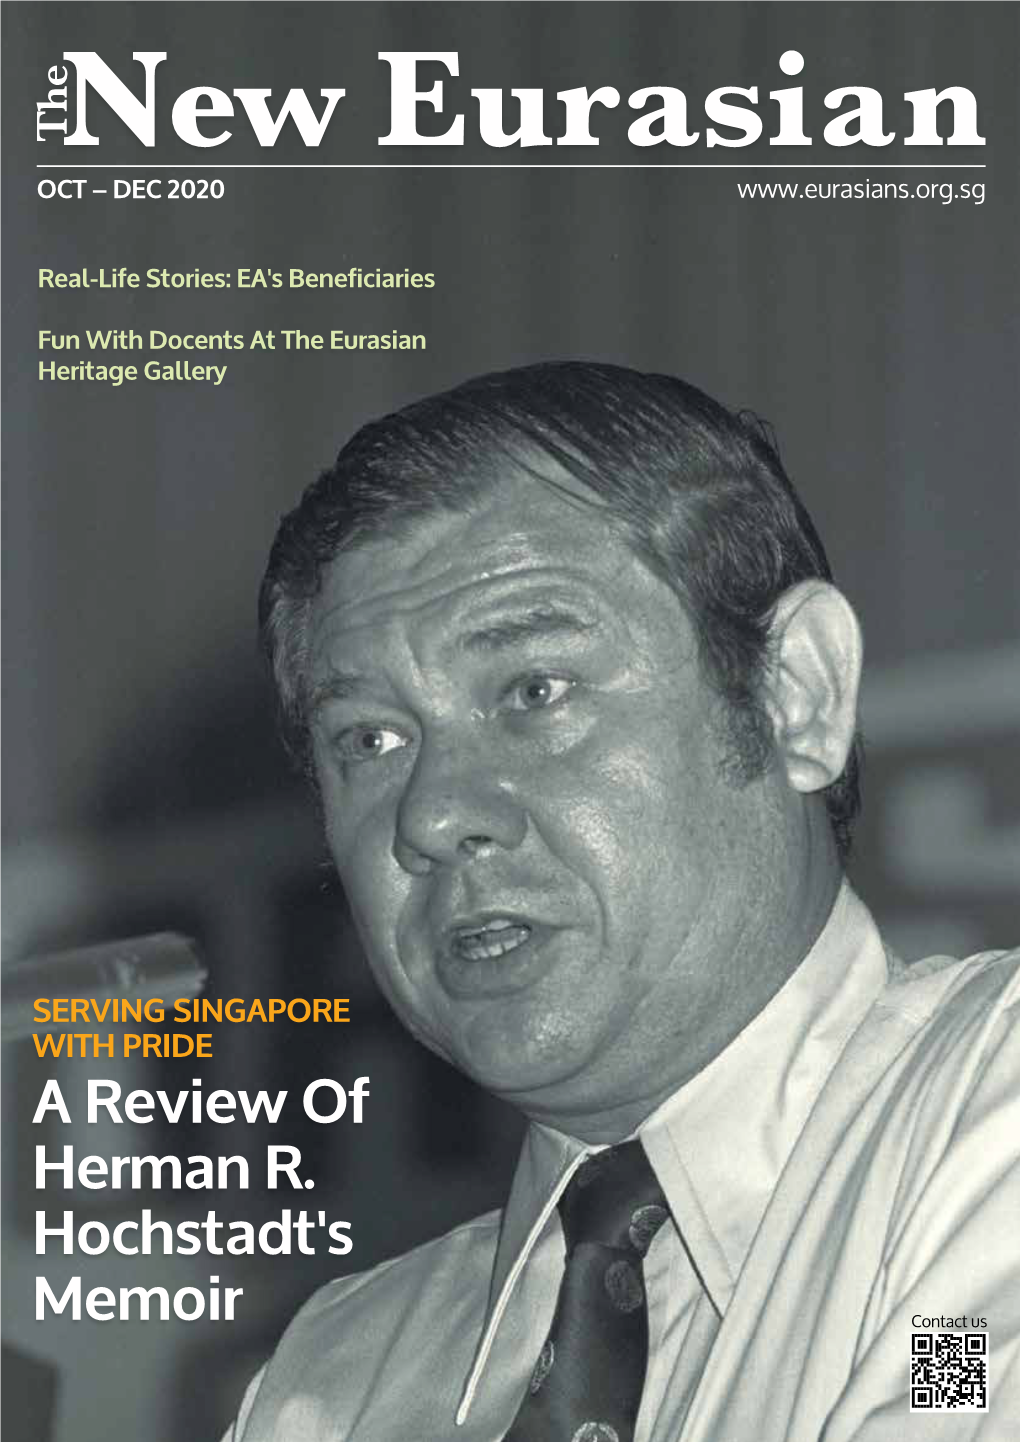 A Review of Herman R. Hochstadt's Memoir